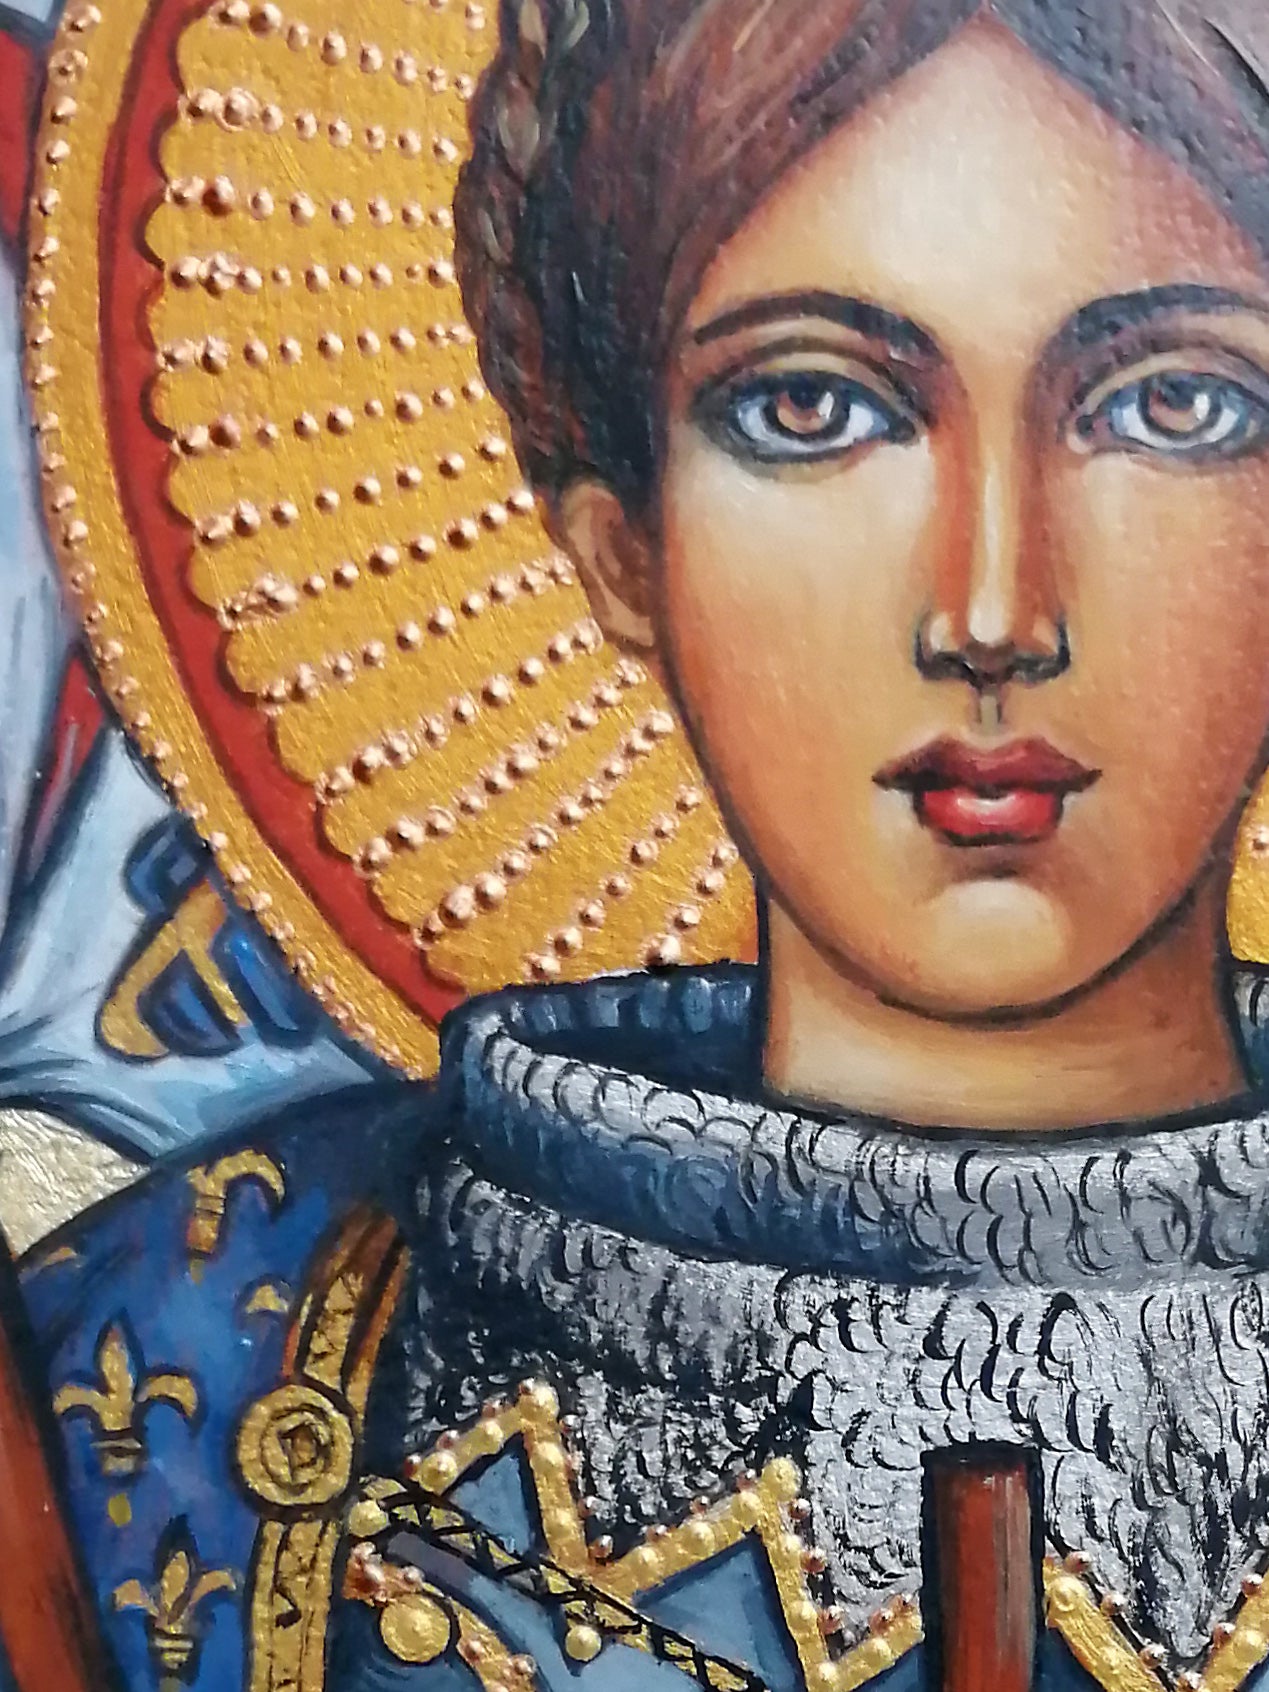 Hand Painted Icon of Saint Joanna D'arc